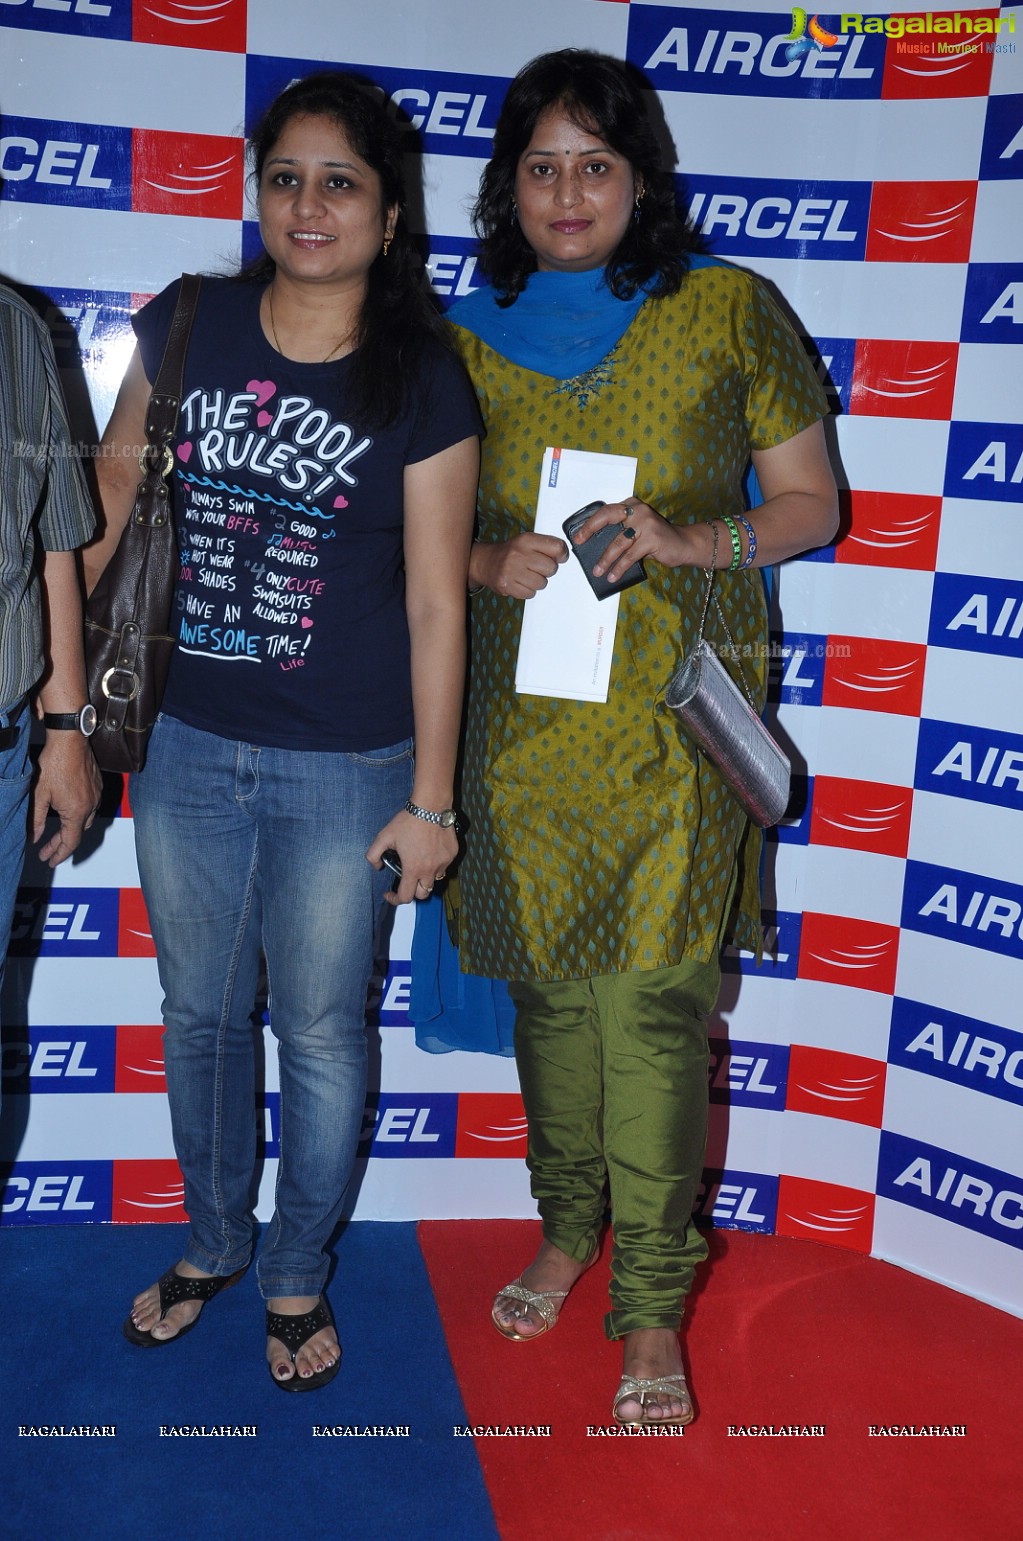 Aircel presents 'Murder' by Aamir Raza Husain in Hyderabad